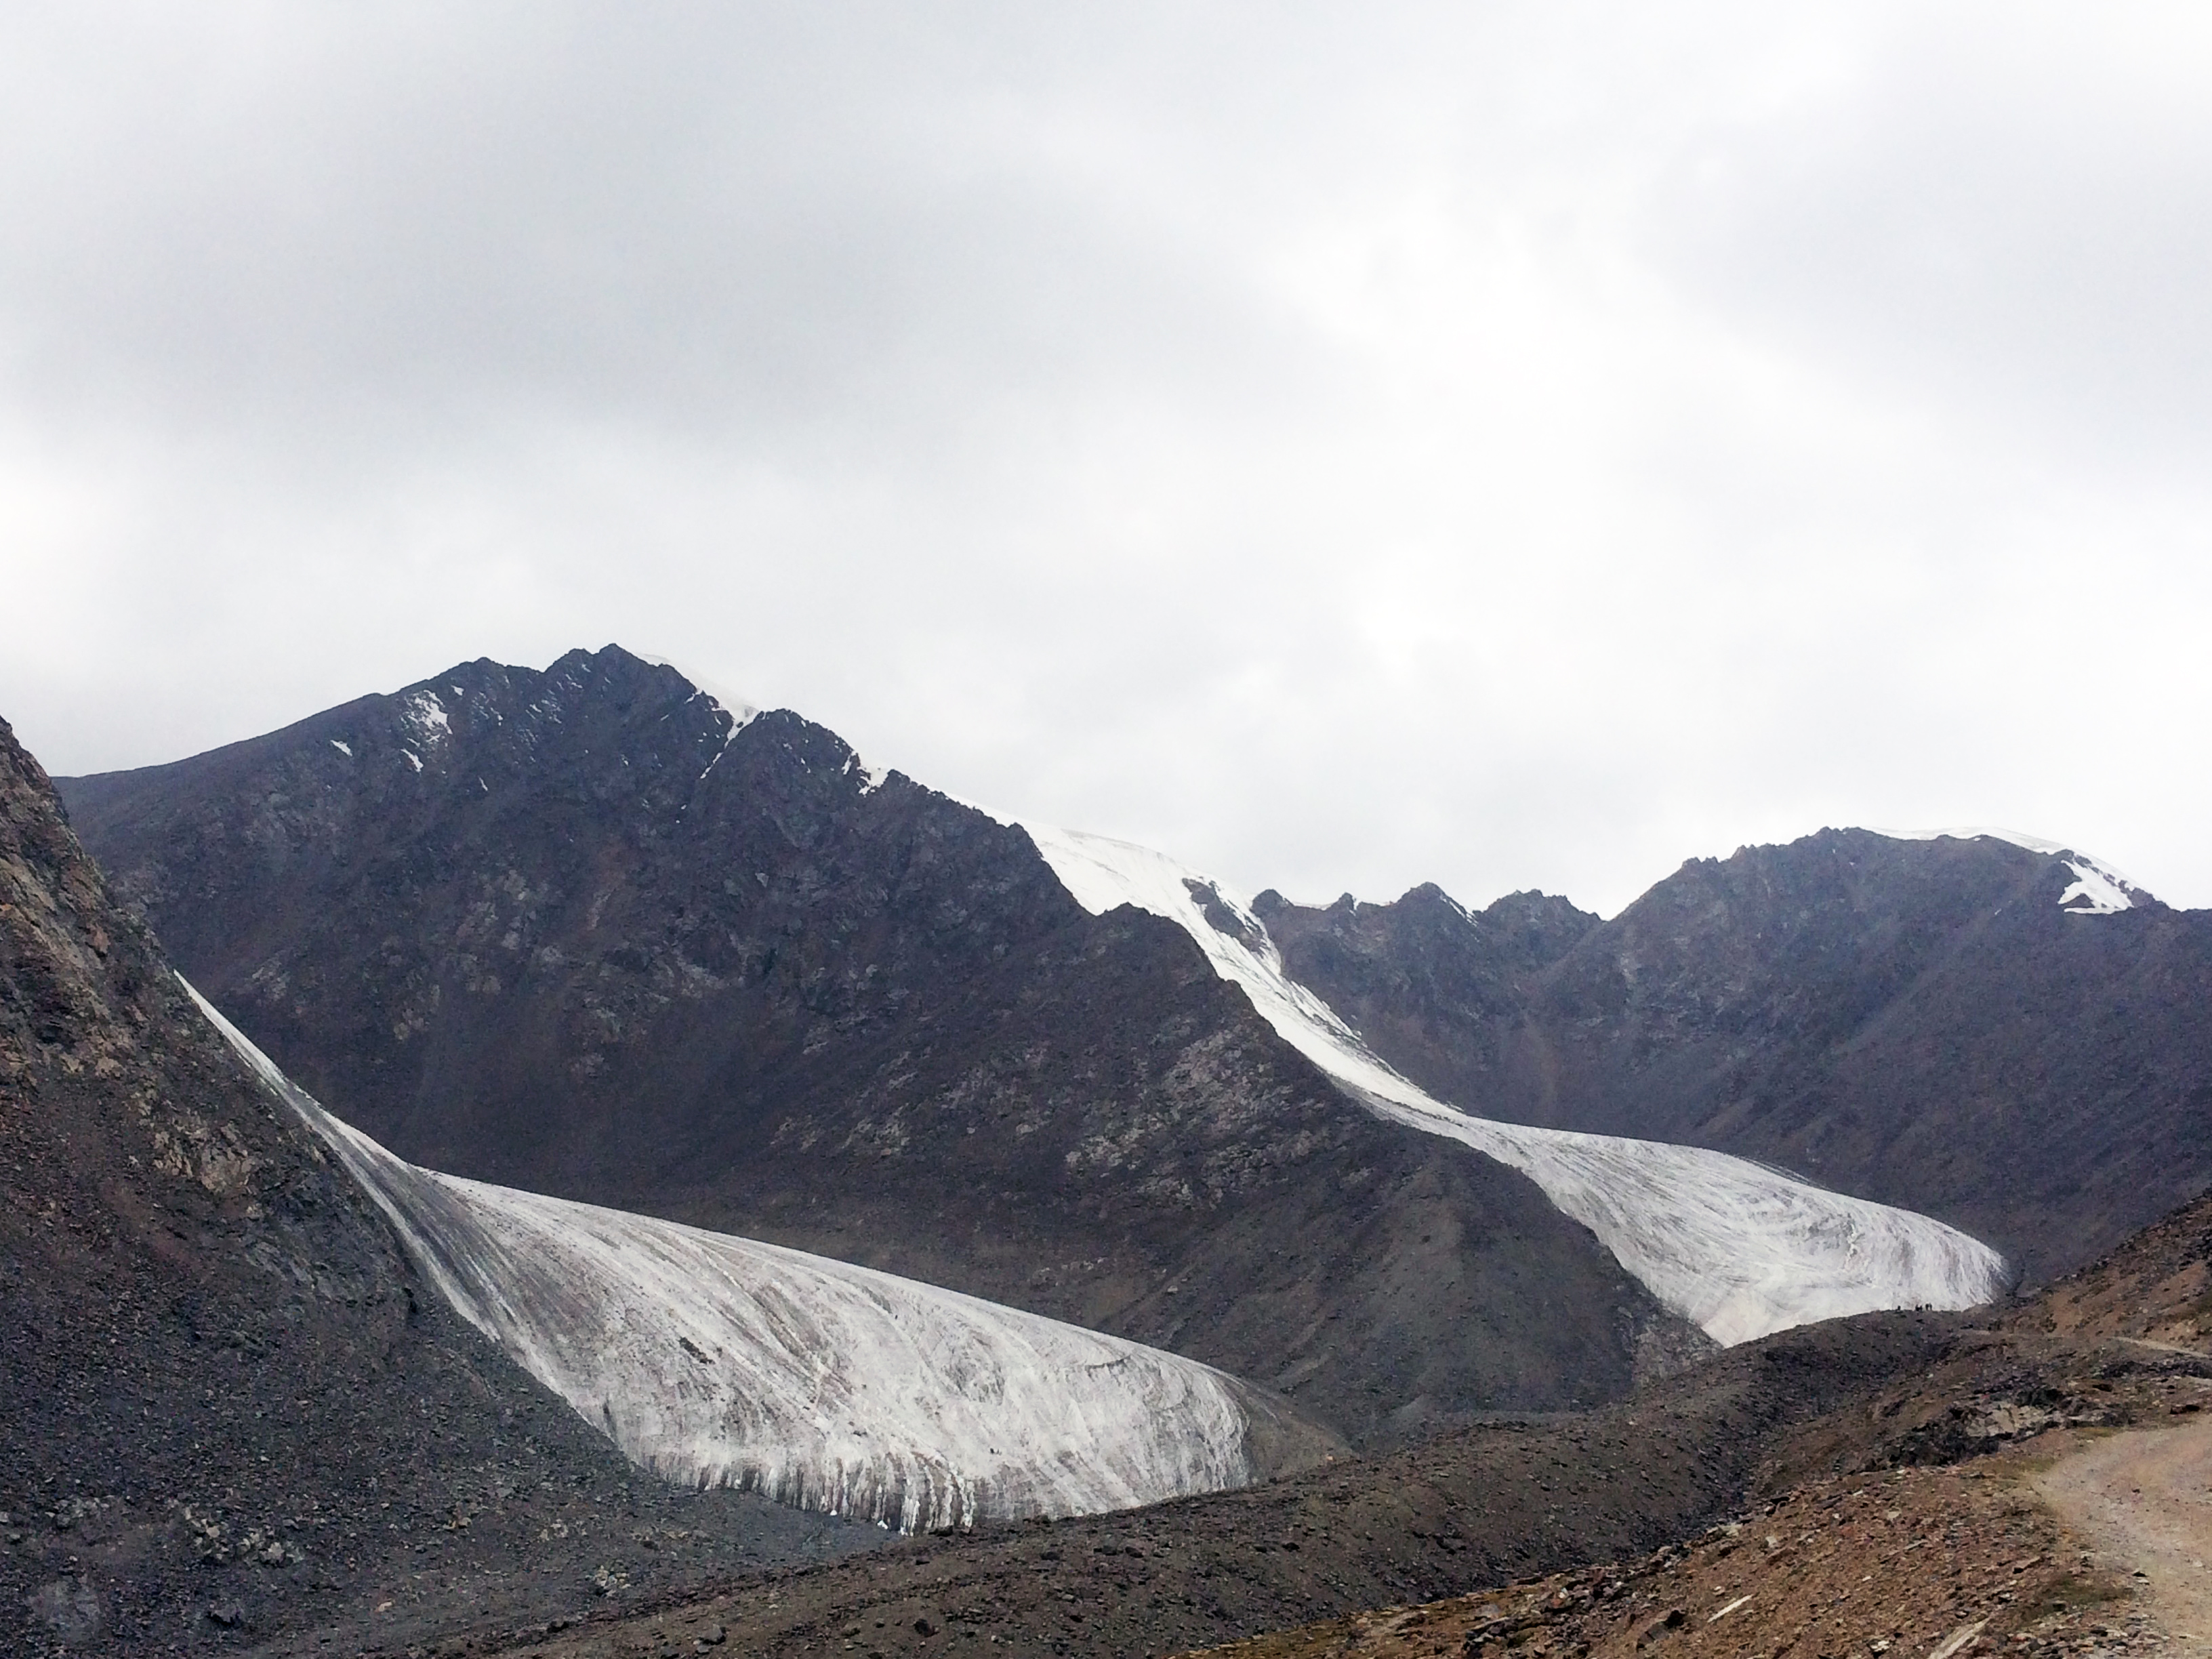 Urumqi Glacier No. 1 in August 2015 (taken by Huilin Li on 28/08/2015)